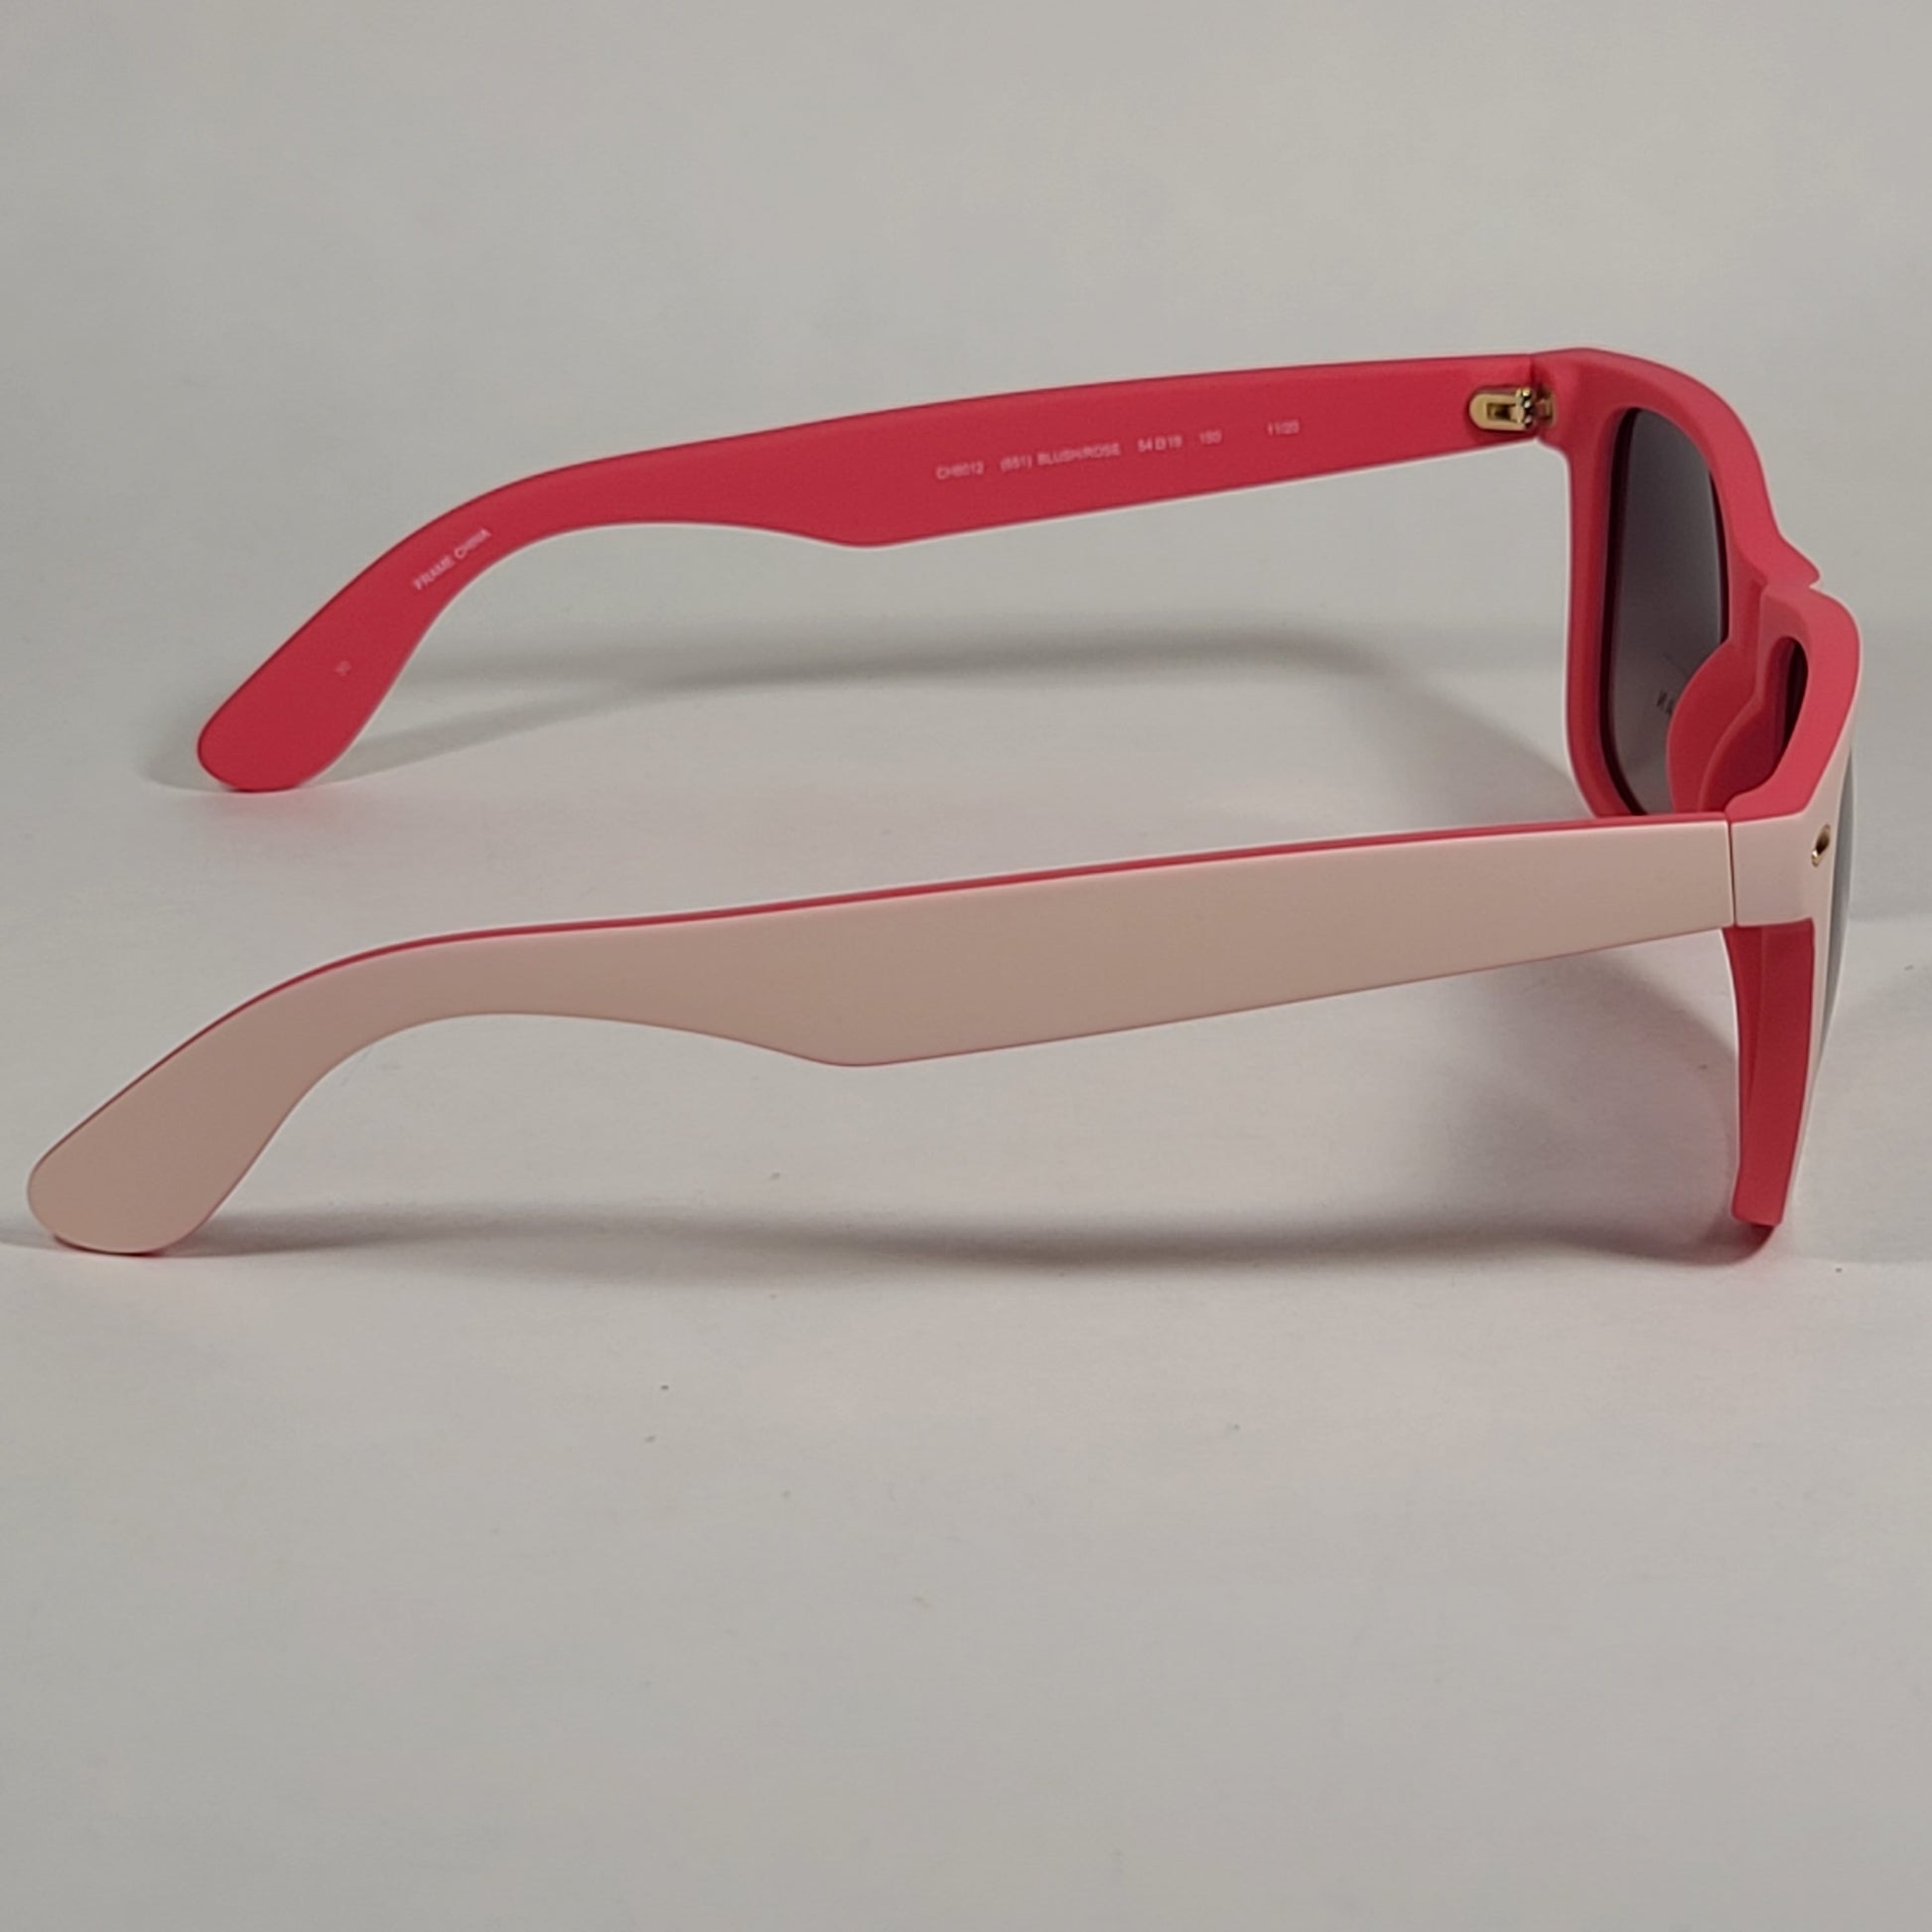 Cole Haan Square CH8012 651 Polarized Zerogrand Sunglasses Pink Blush Rose - Sunglasses